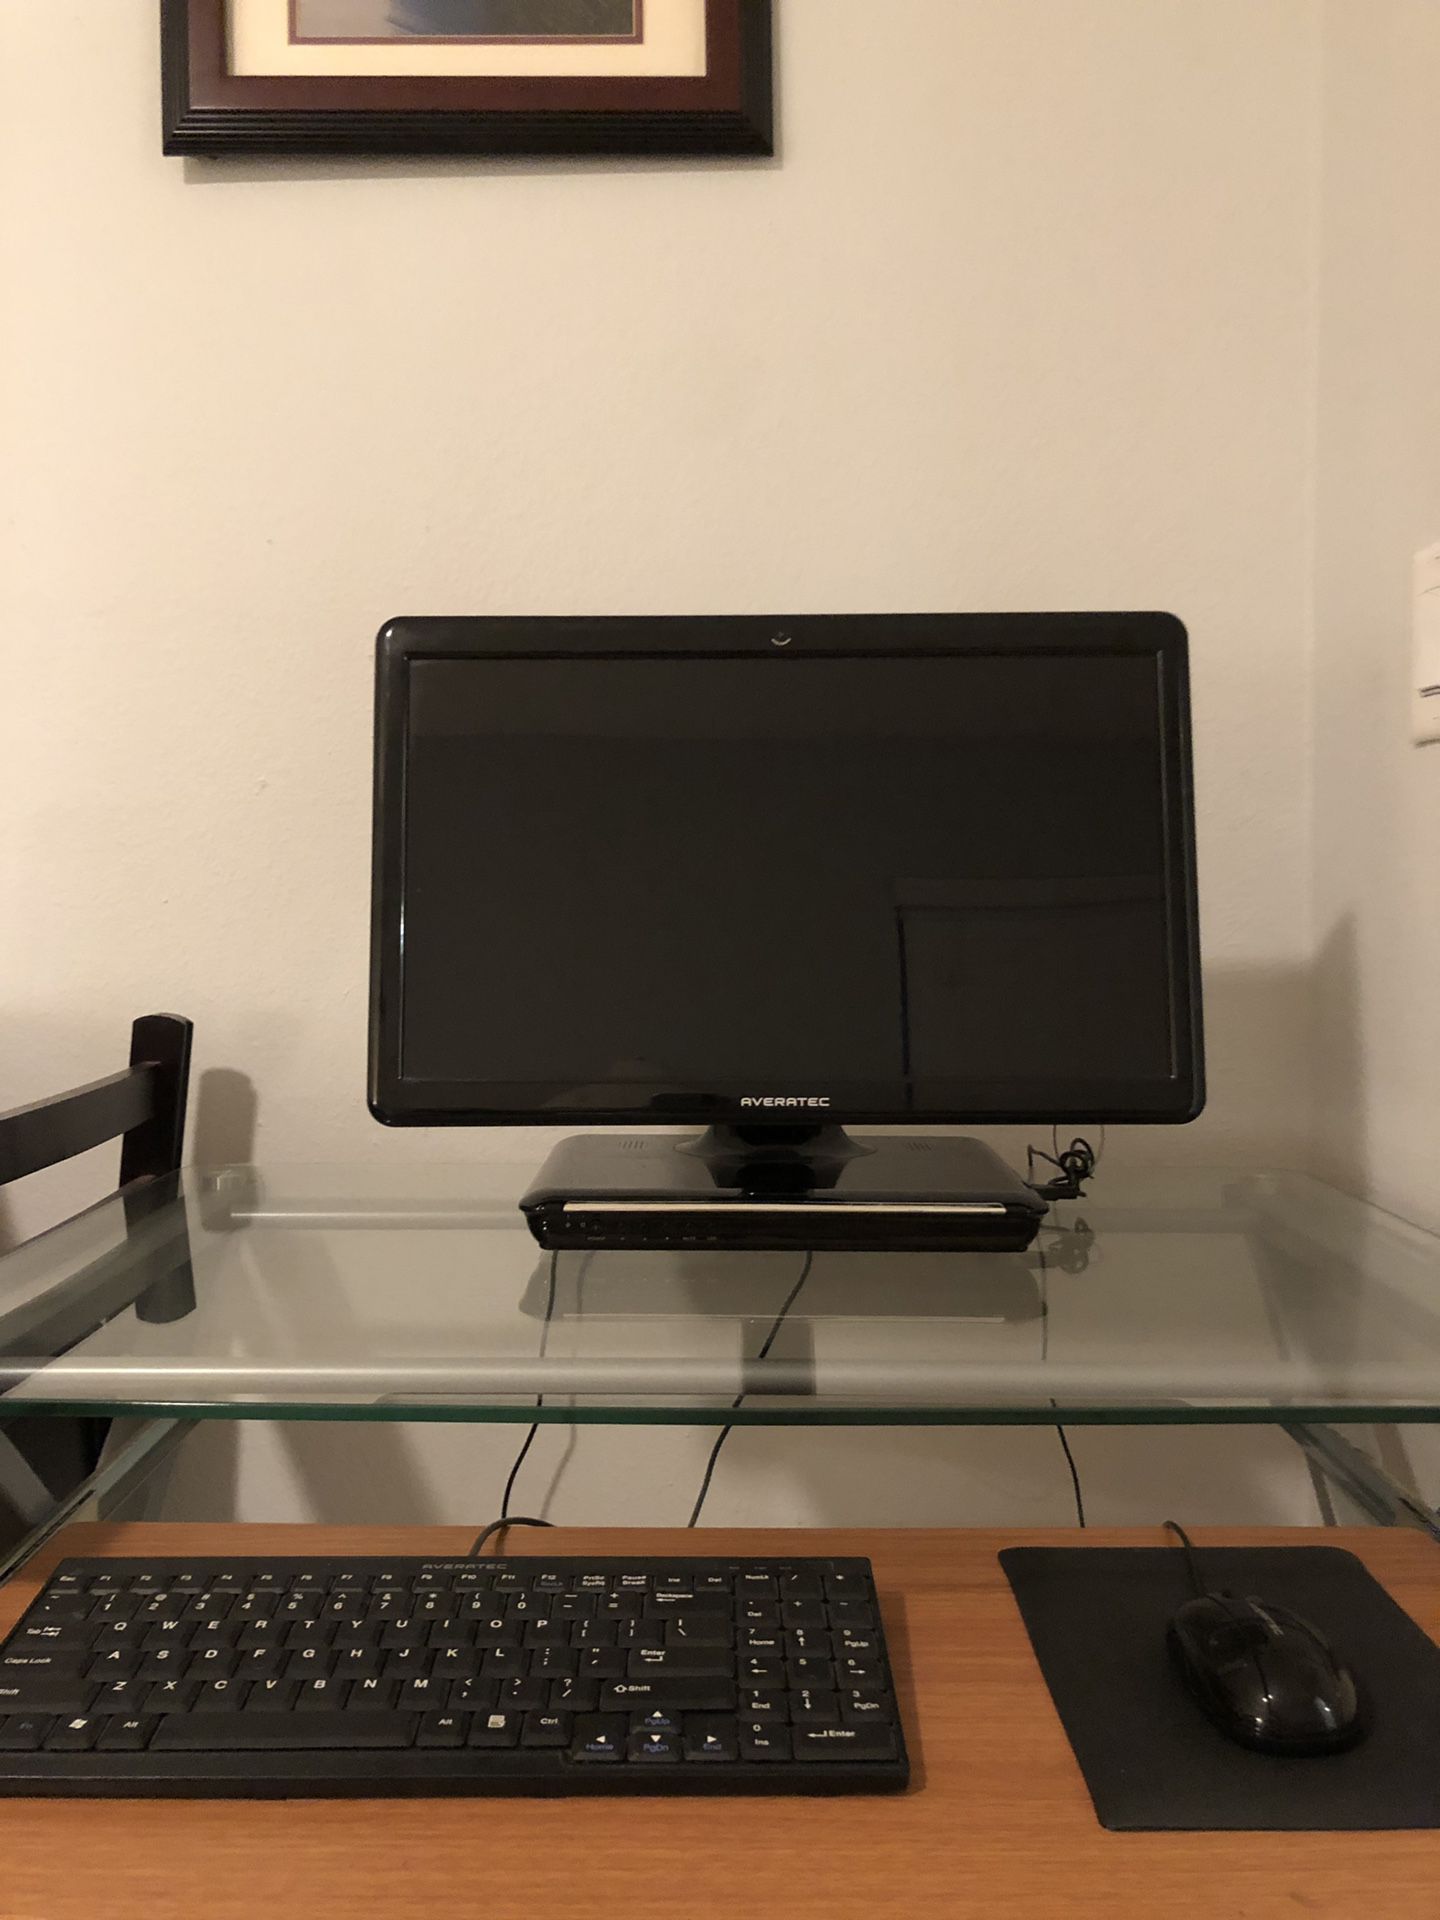 Averatec All-In-One Desktop Computer